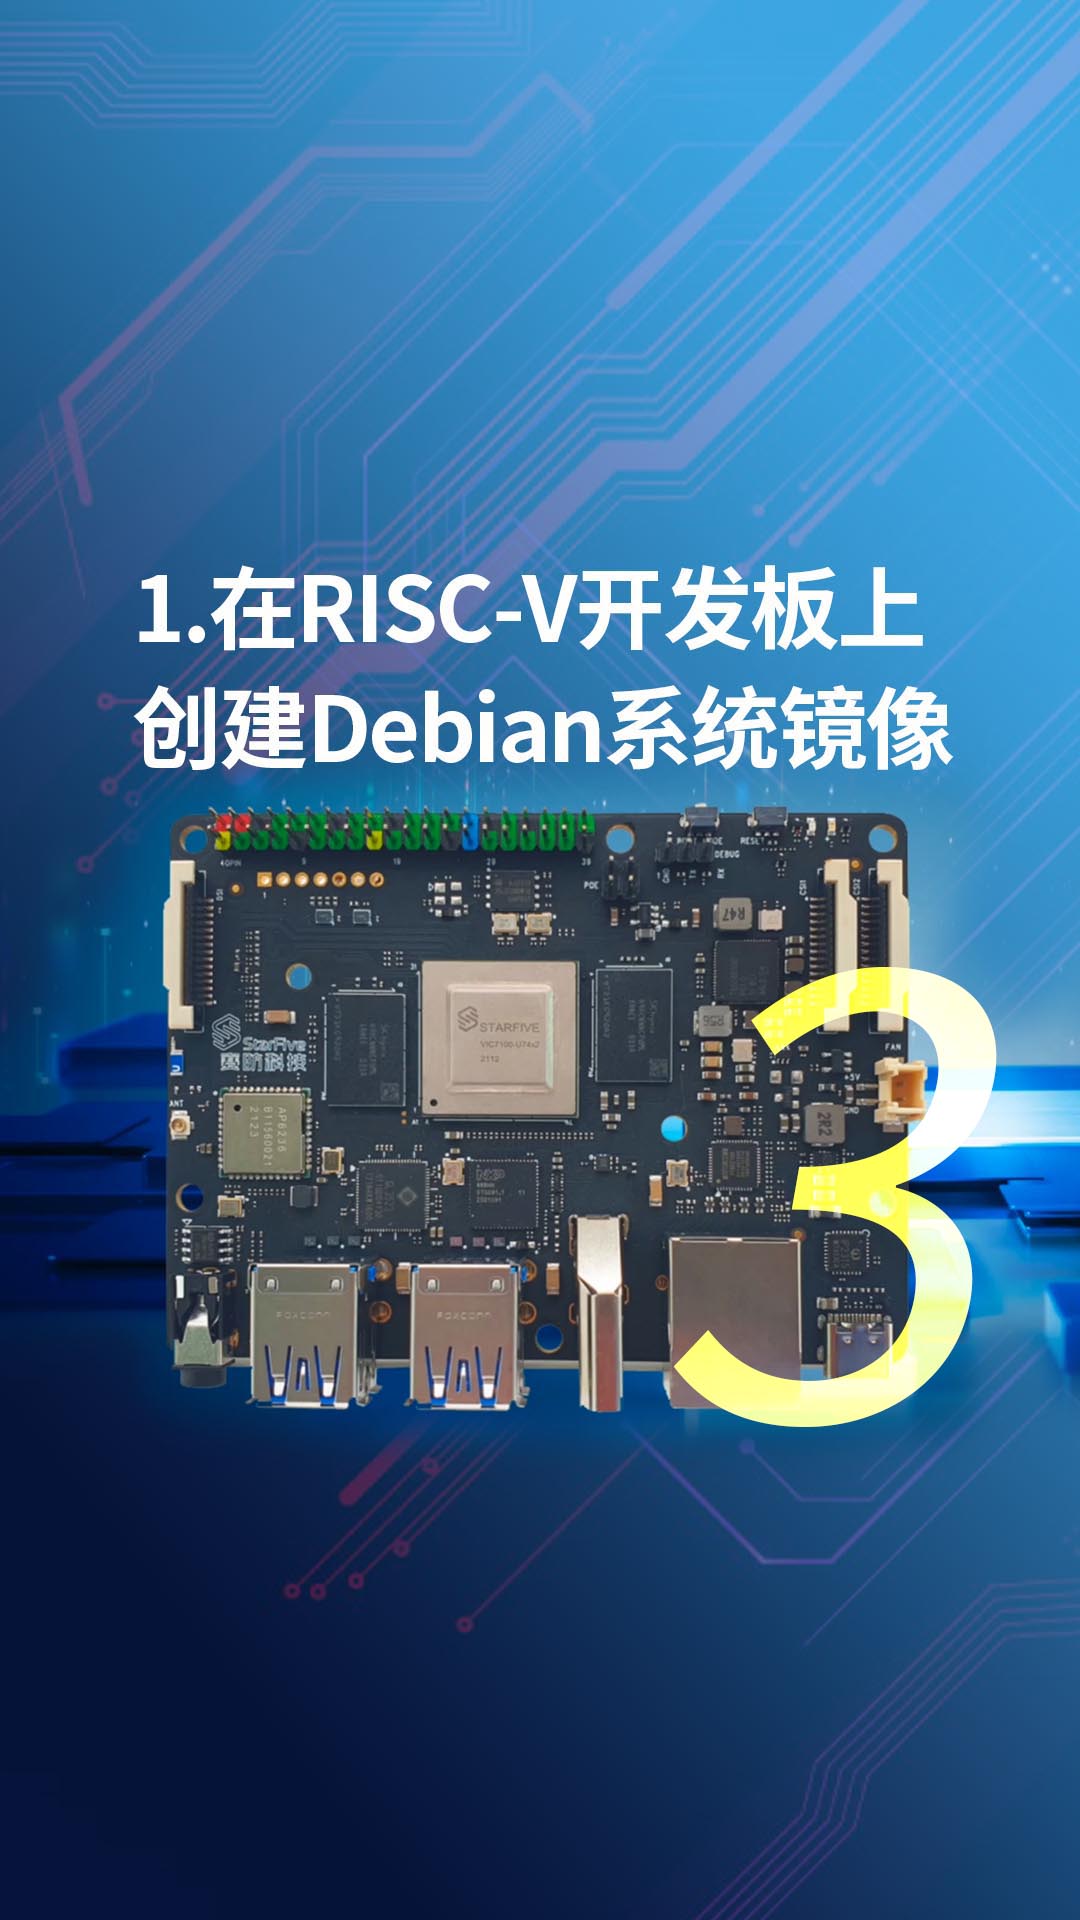 1-在RISC-V开发板上创建Debian系统镜像3